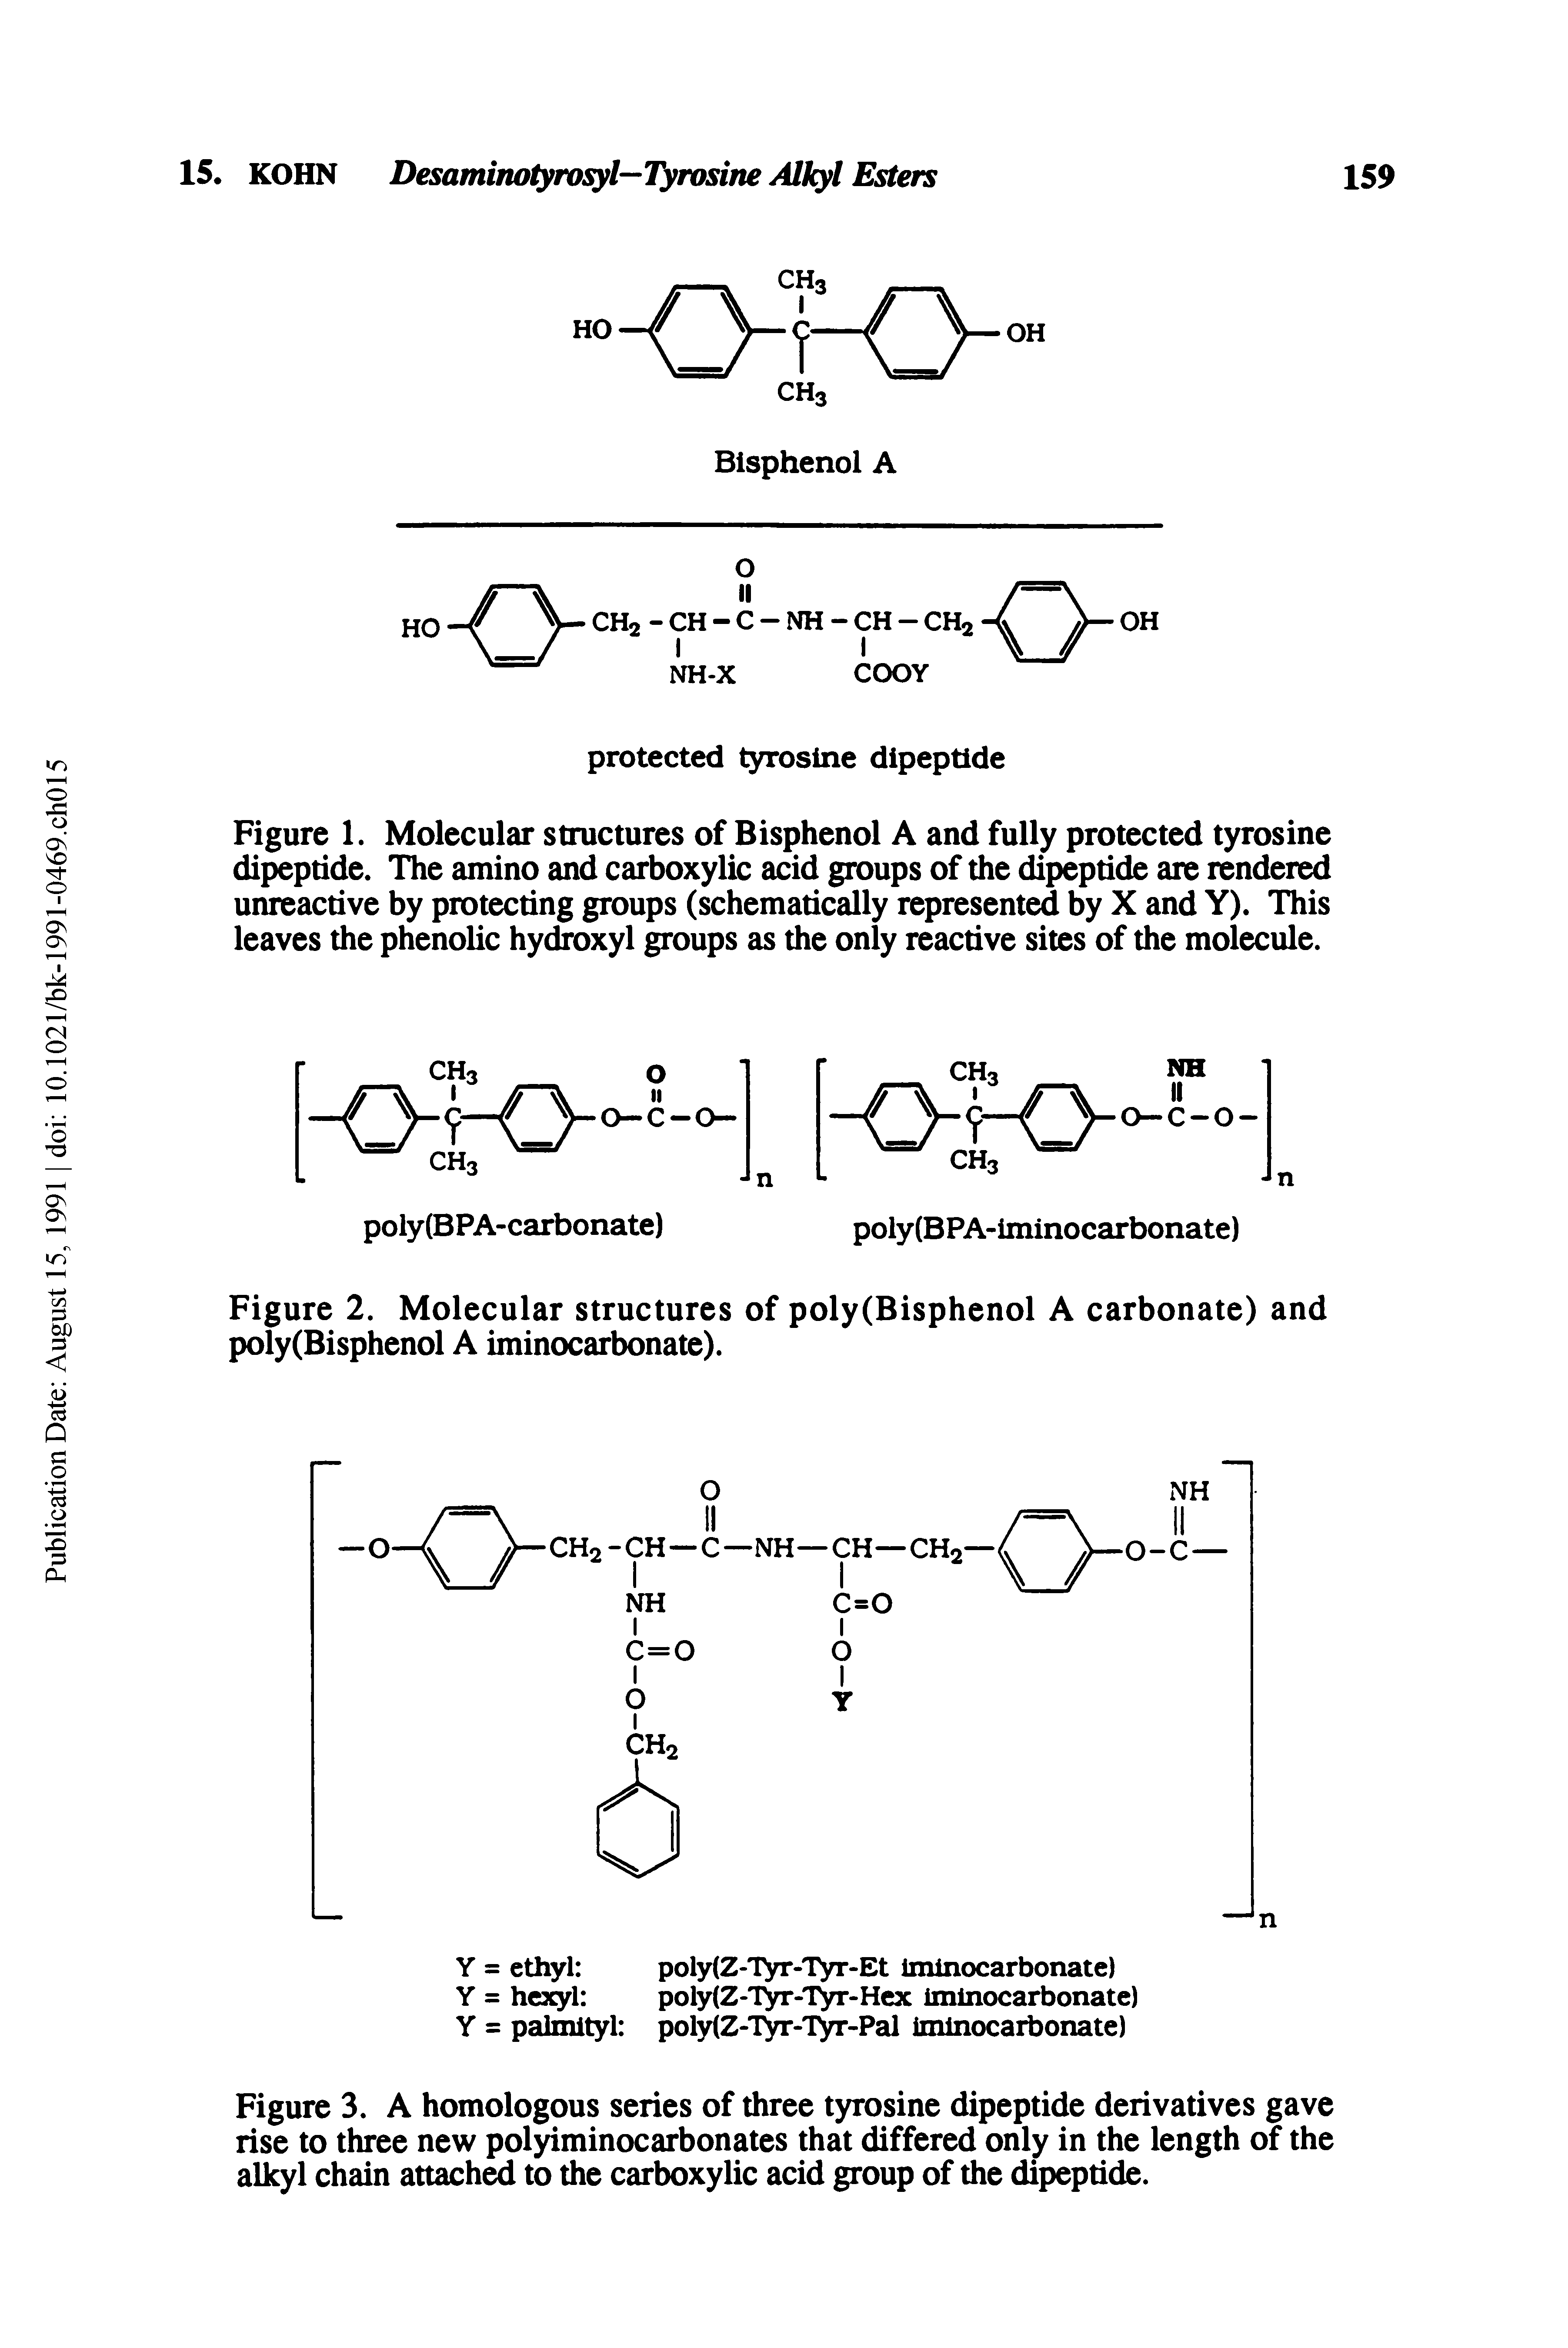 Figure 2. Molecular structures of poly(Bisphenol A carbonate) and poly(Bisphenol A iminocarbonate).